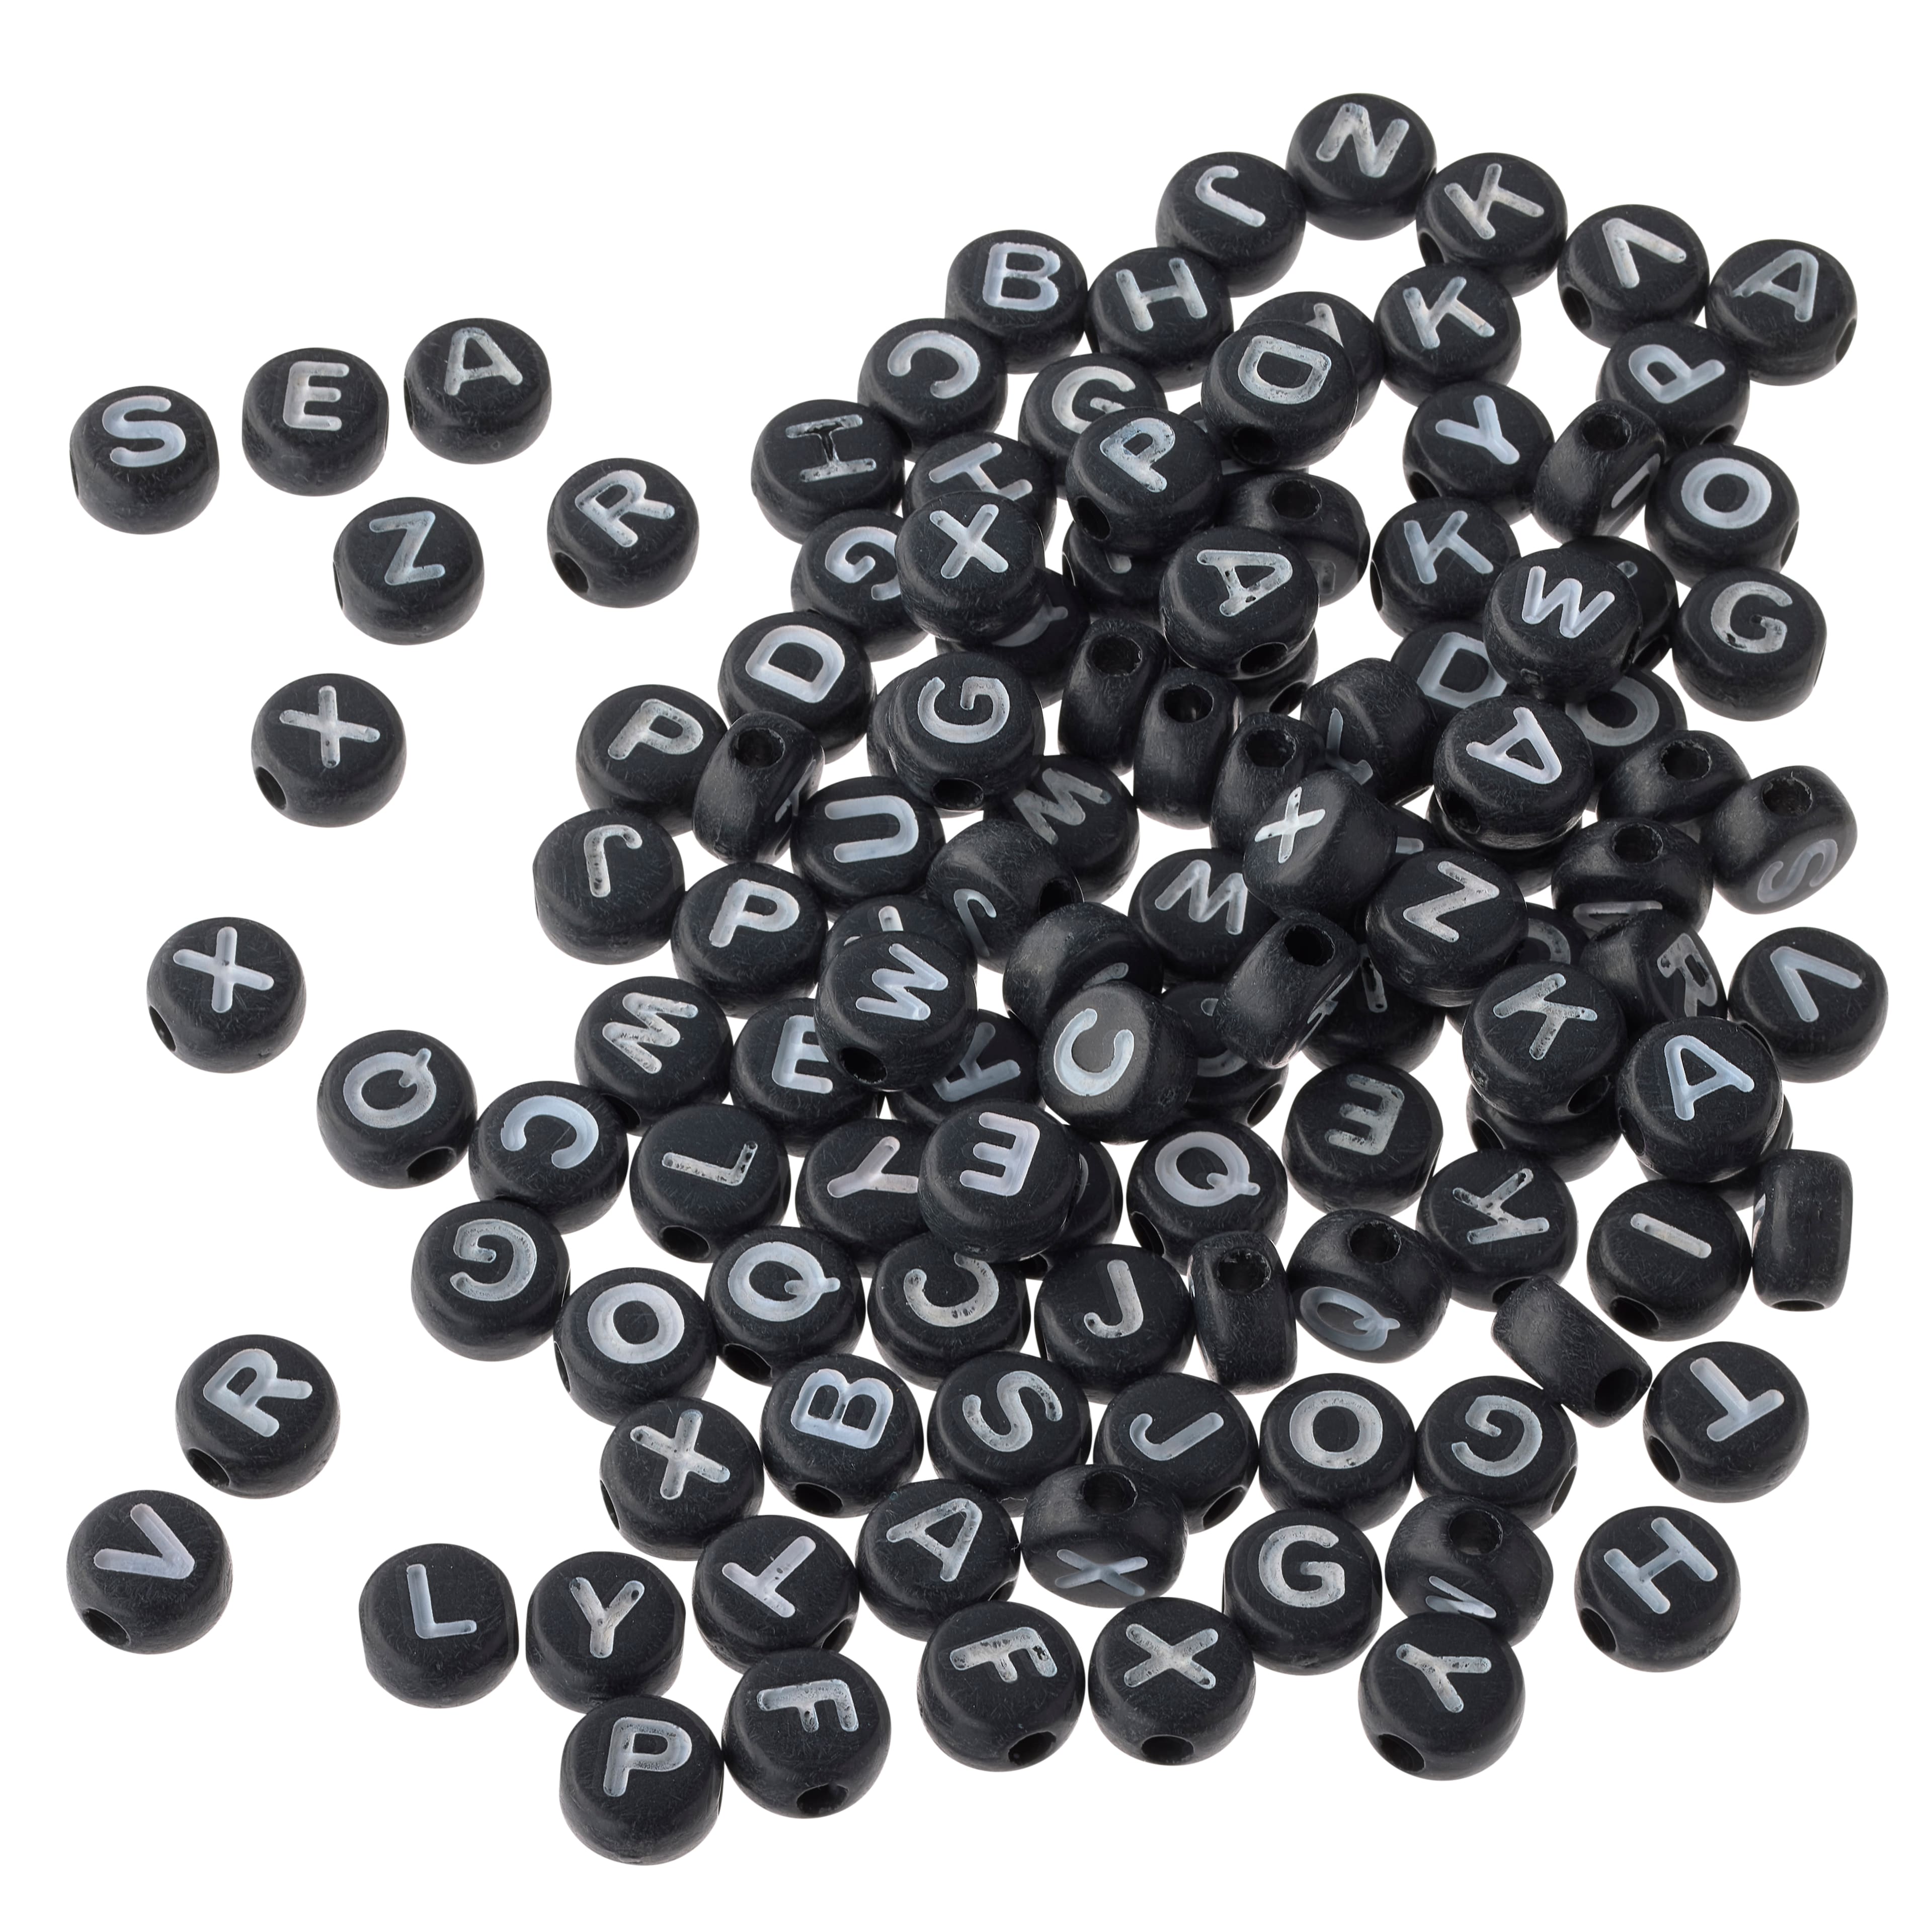 Creatology Black Alphabet Circular Beads - Each